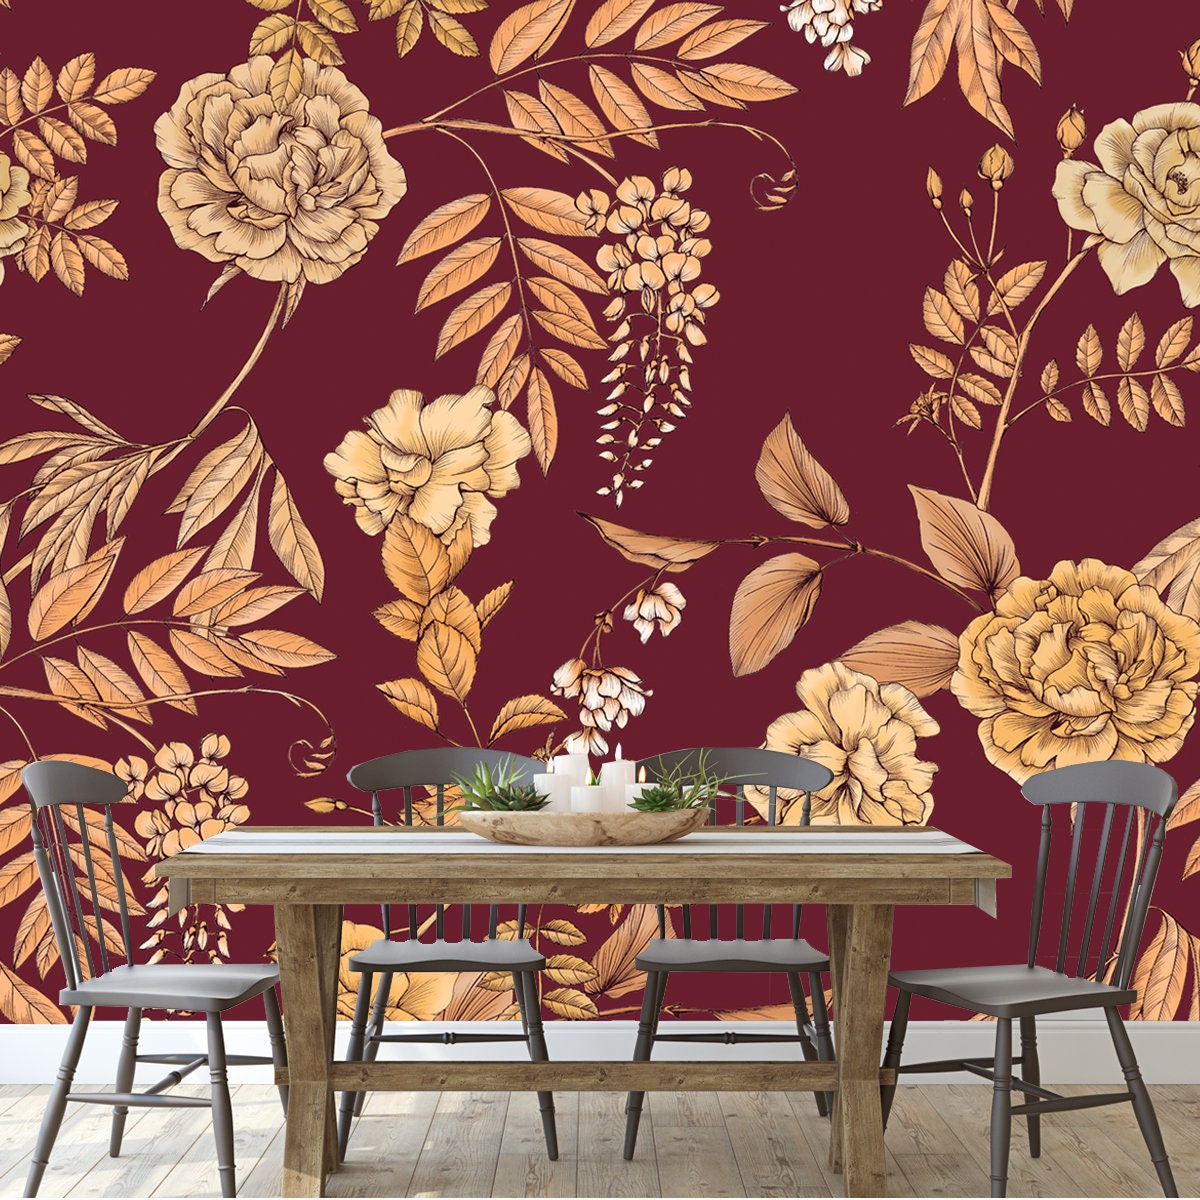 Botanical Flower Pattern. Golden Flowers on a Burgundy Background Wallpaper Dining Room Mural